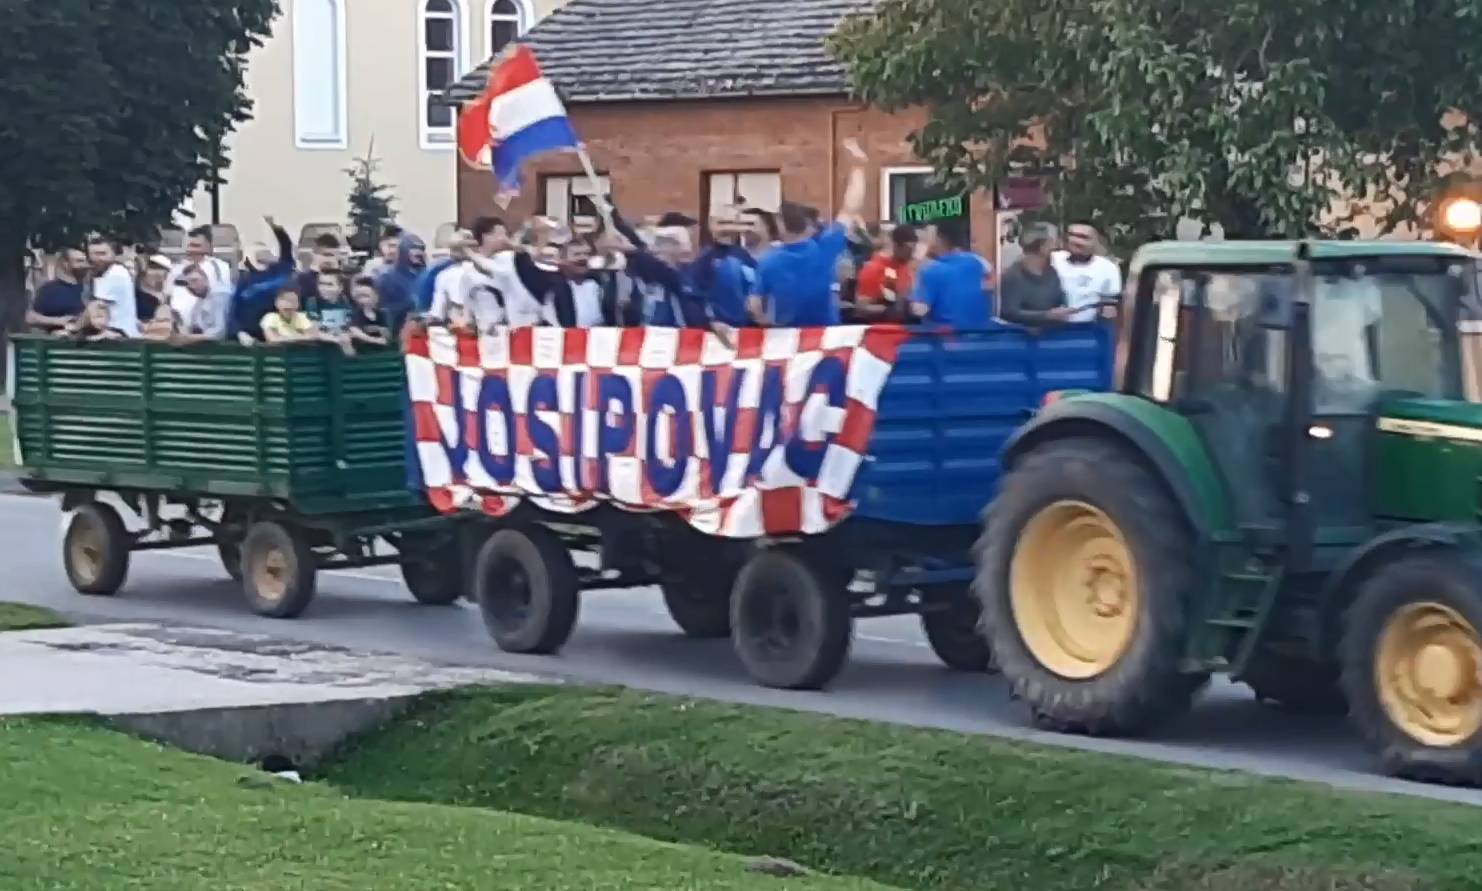 Karusel na slavonski način: U traktoru su proslavili naslov!